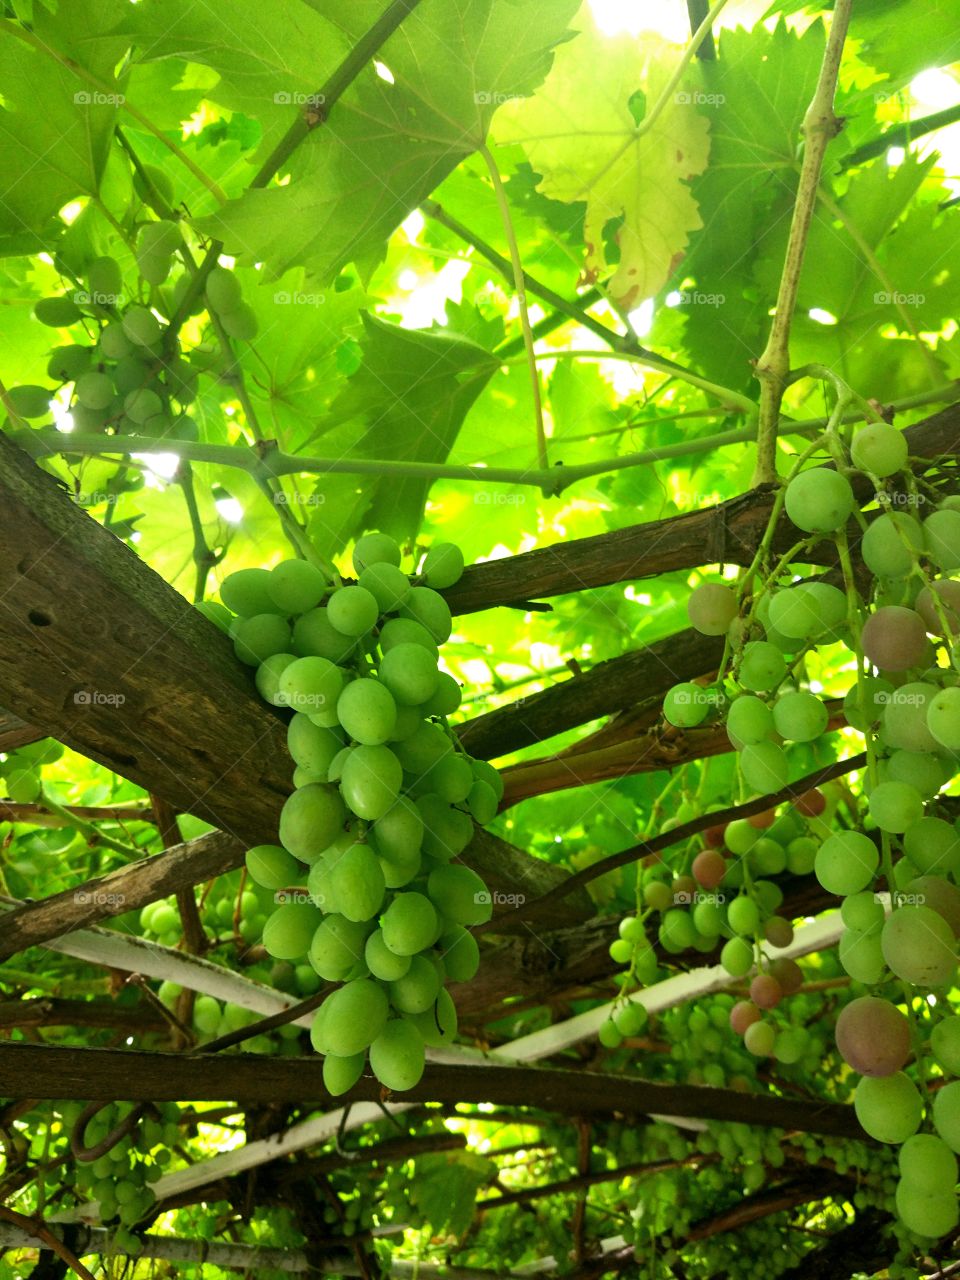 Unpicked grapes. Grapes on vine